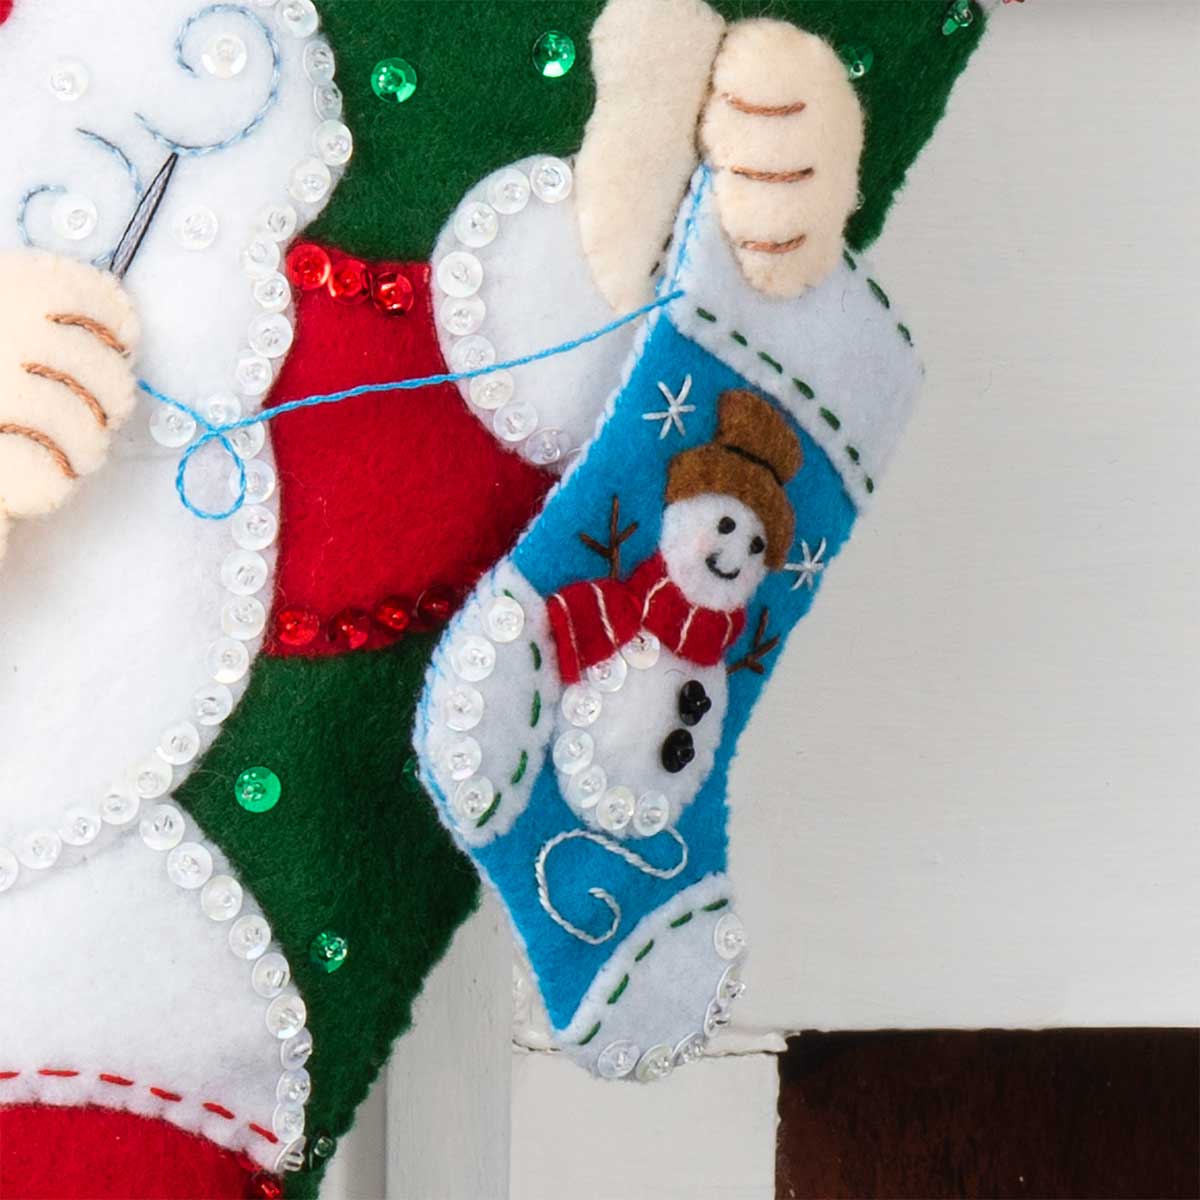 Bucilla ® Seasonal - Felt - Stocking Kits - Stitching Santa - 89234E